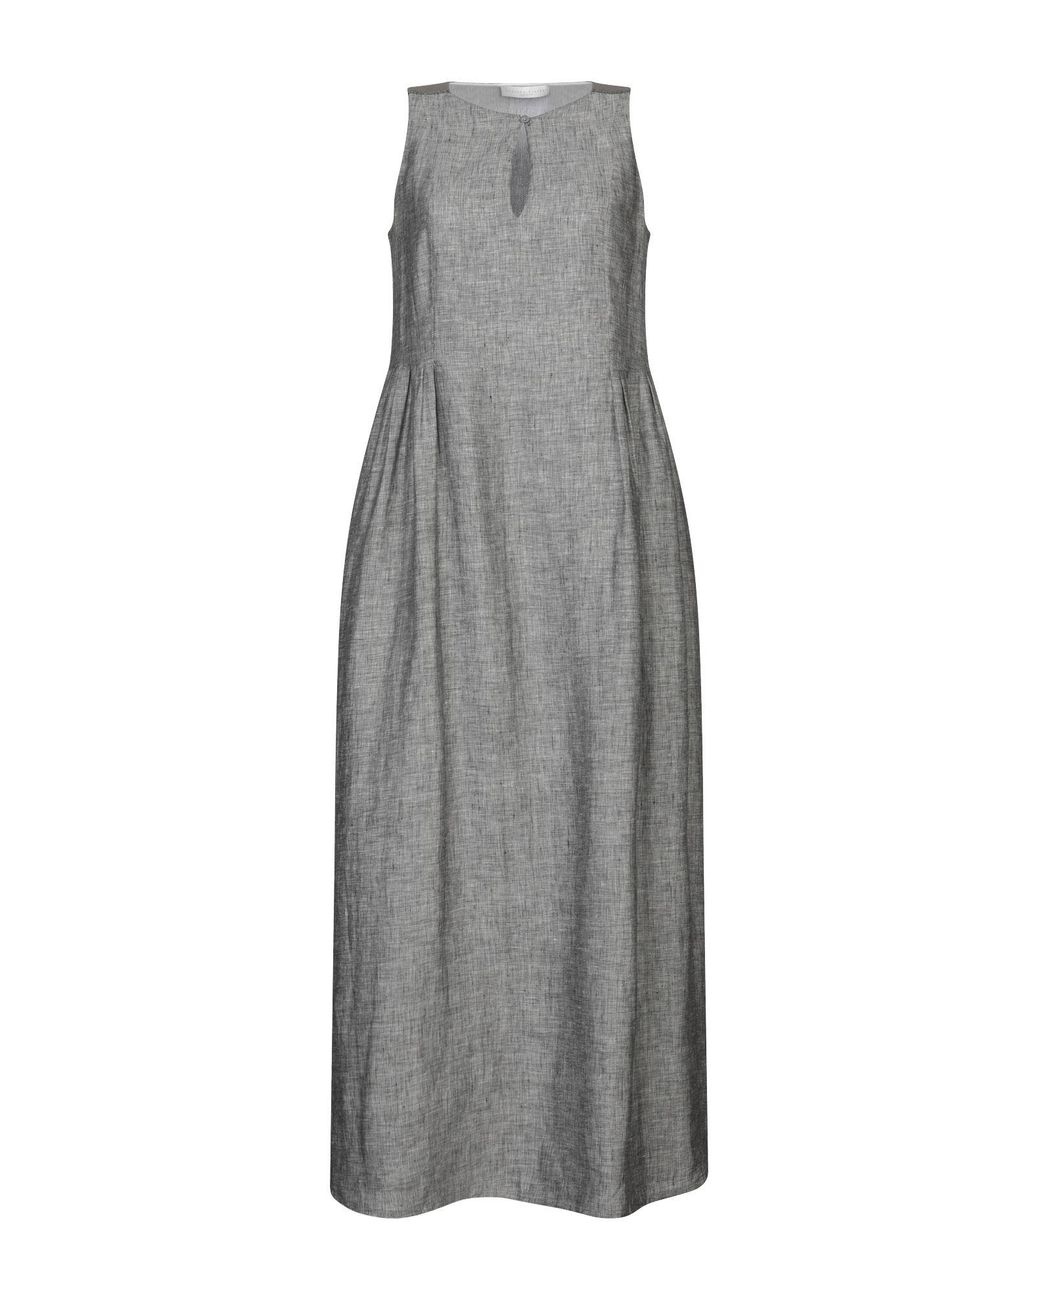 Fabiana Filippi Linen Long Dress in Grey (Gray) - Lyst